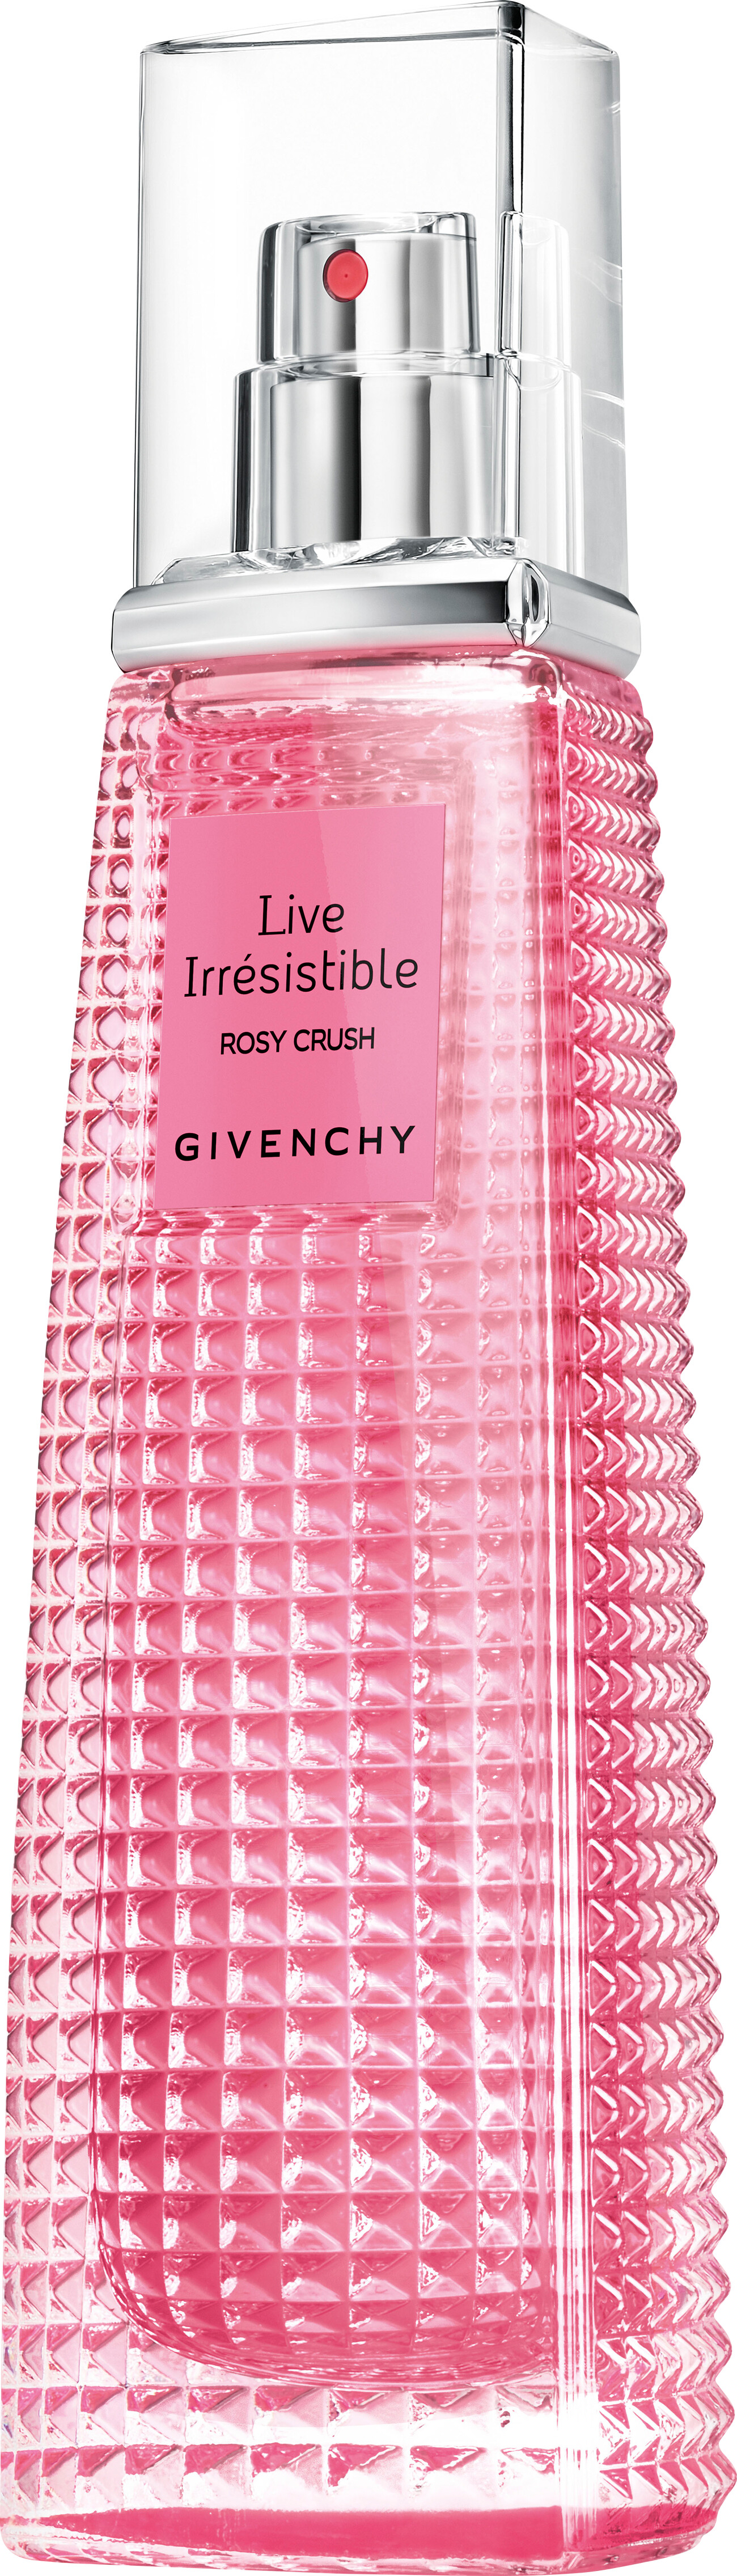 givenchy irresistible rosy crush